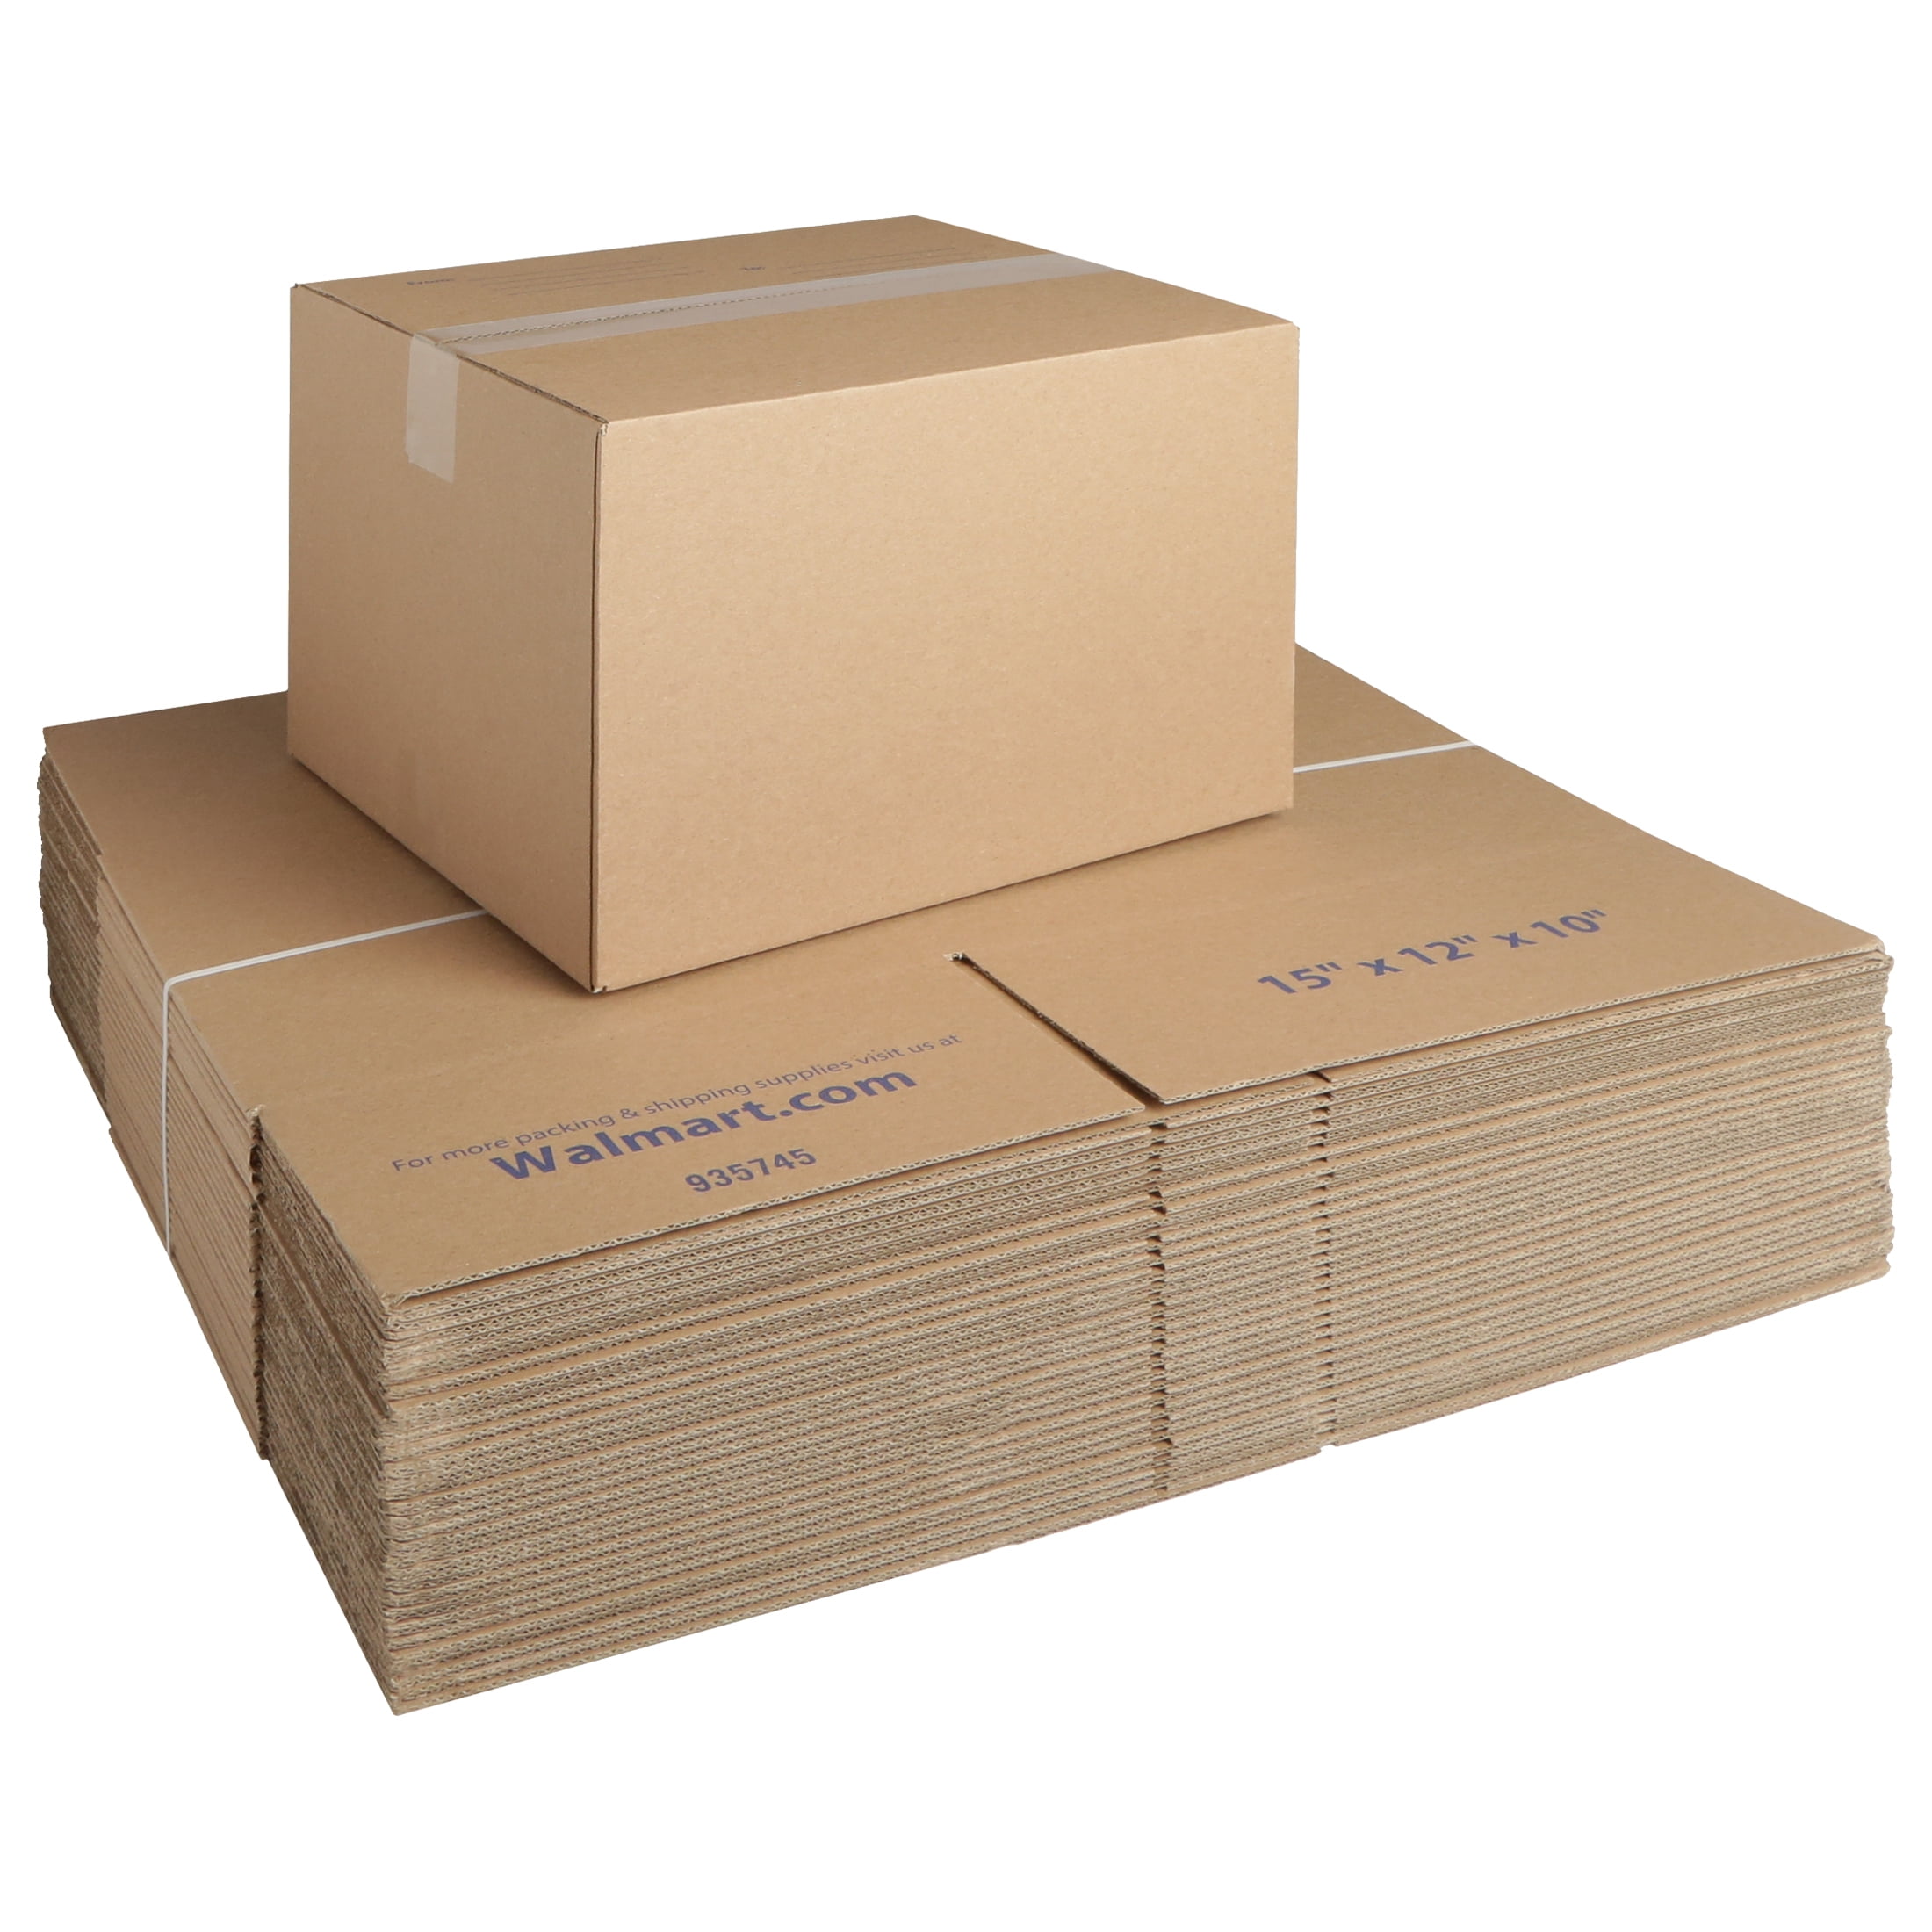 KIT - 15 Boxes + Packing Supplies